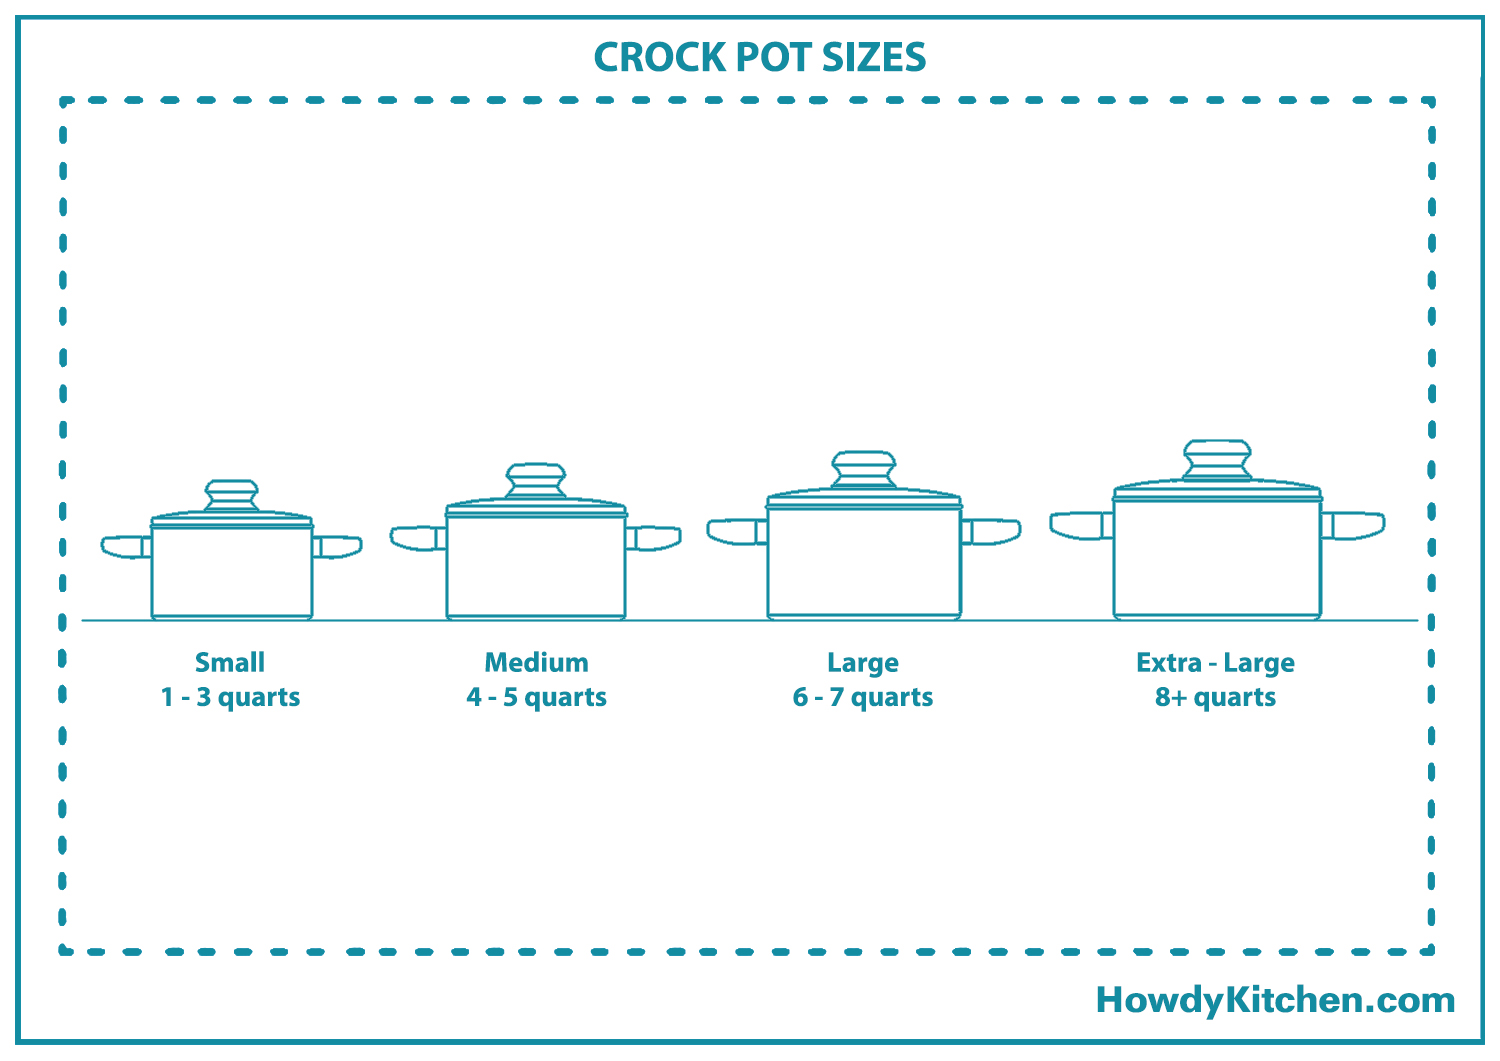 Crock pot sizes